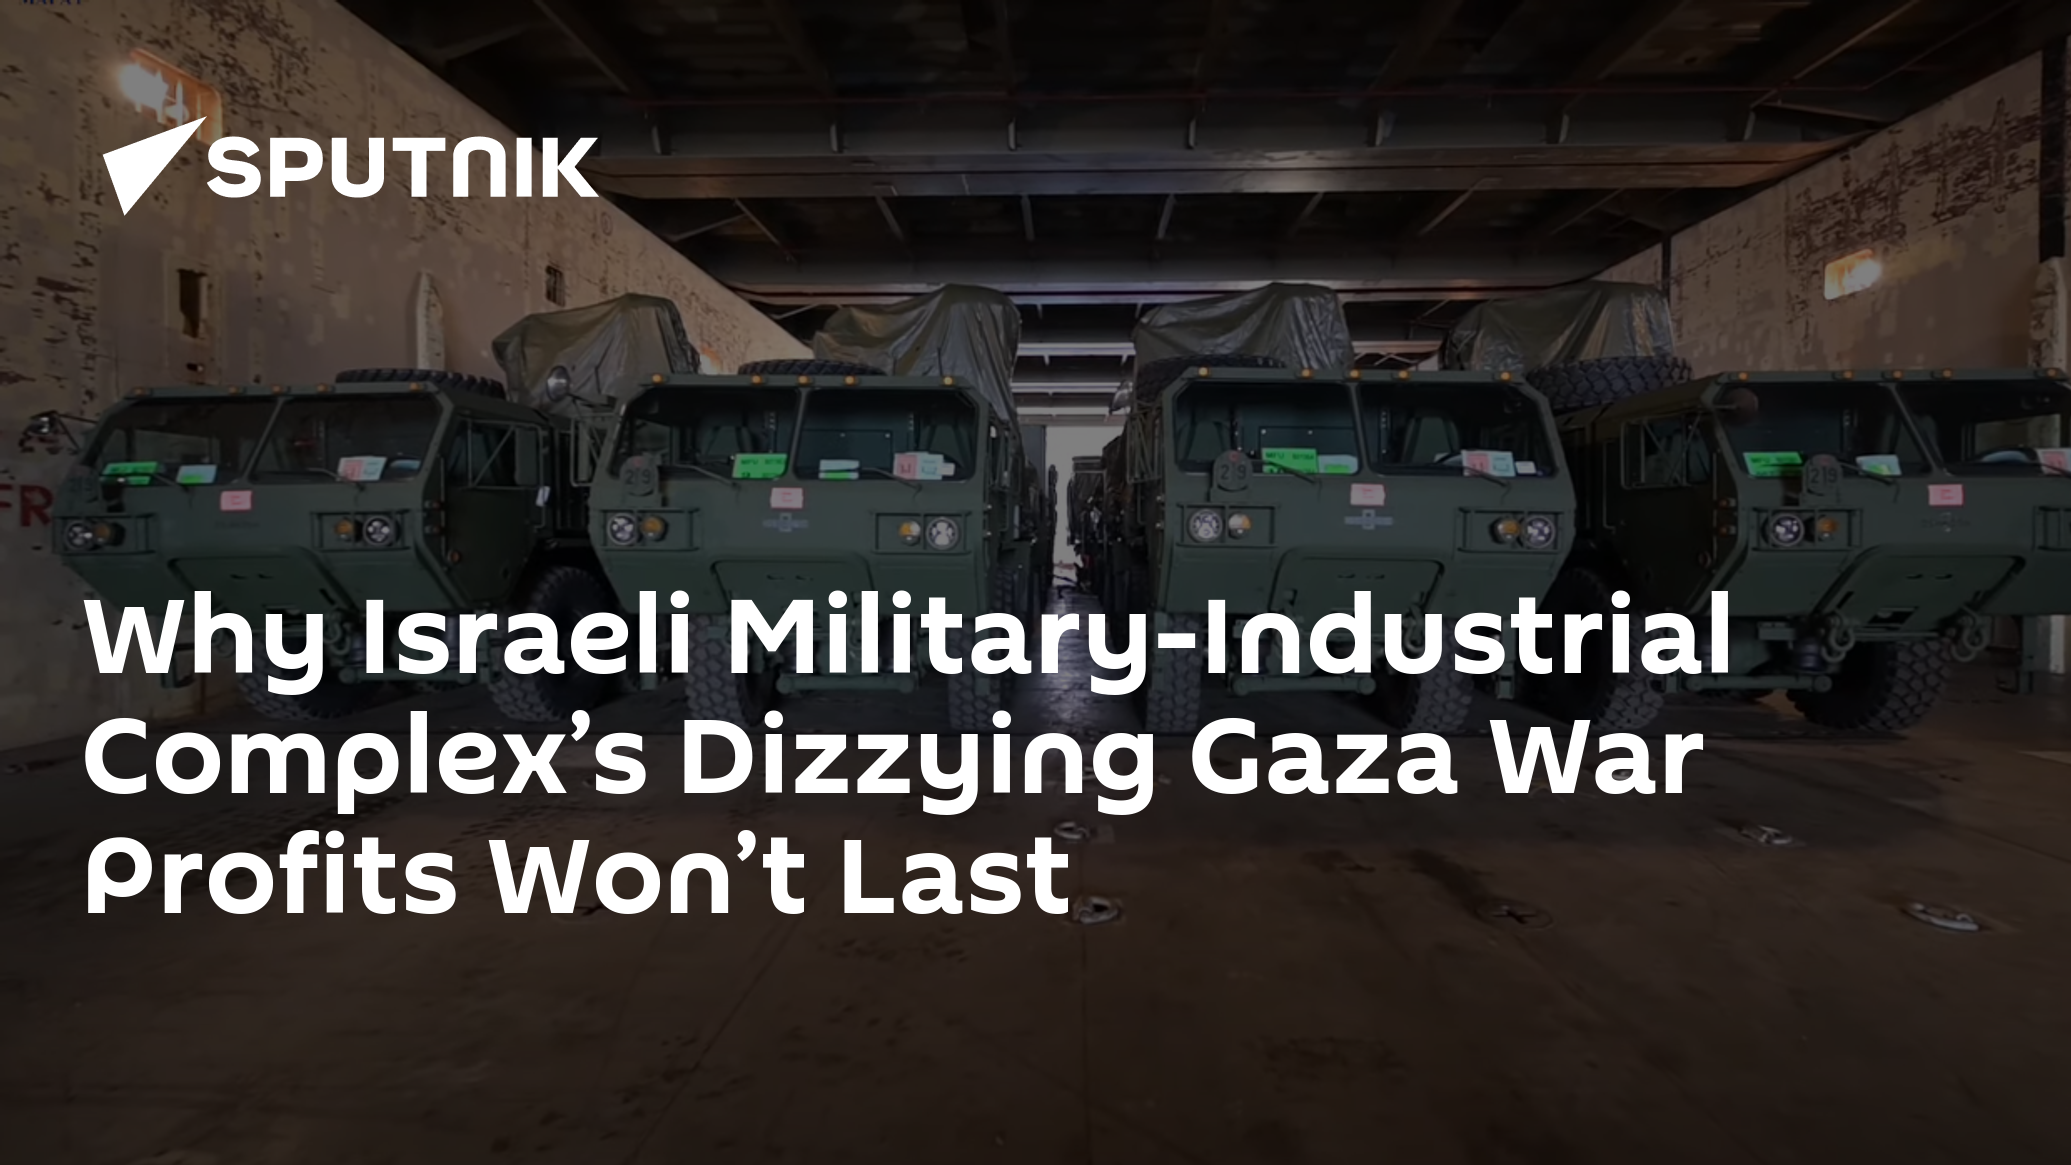 Why Israeli Military-Industrial Complex’s Dizzying Gaza War Profits Won’t Last